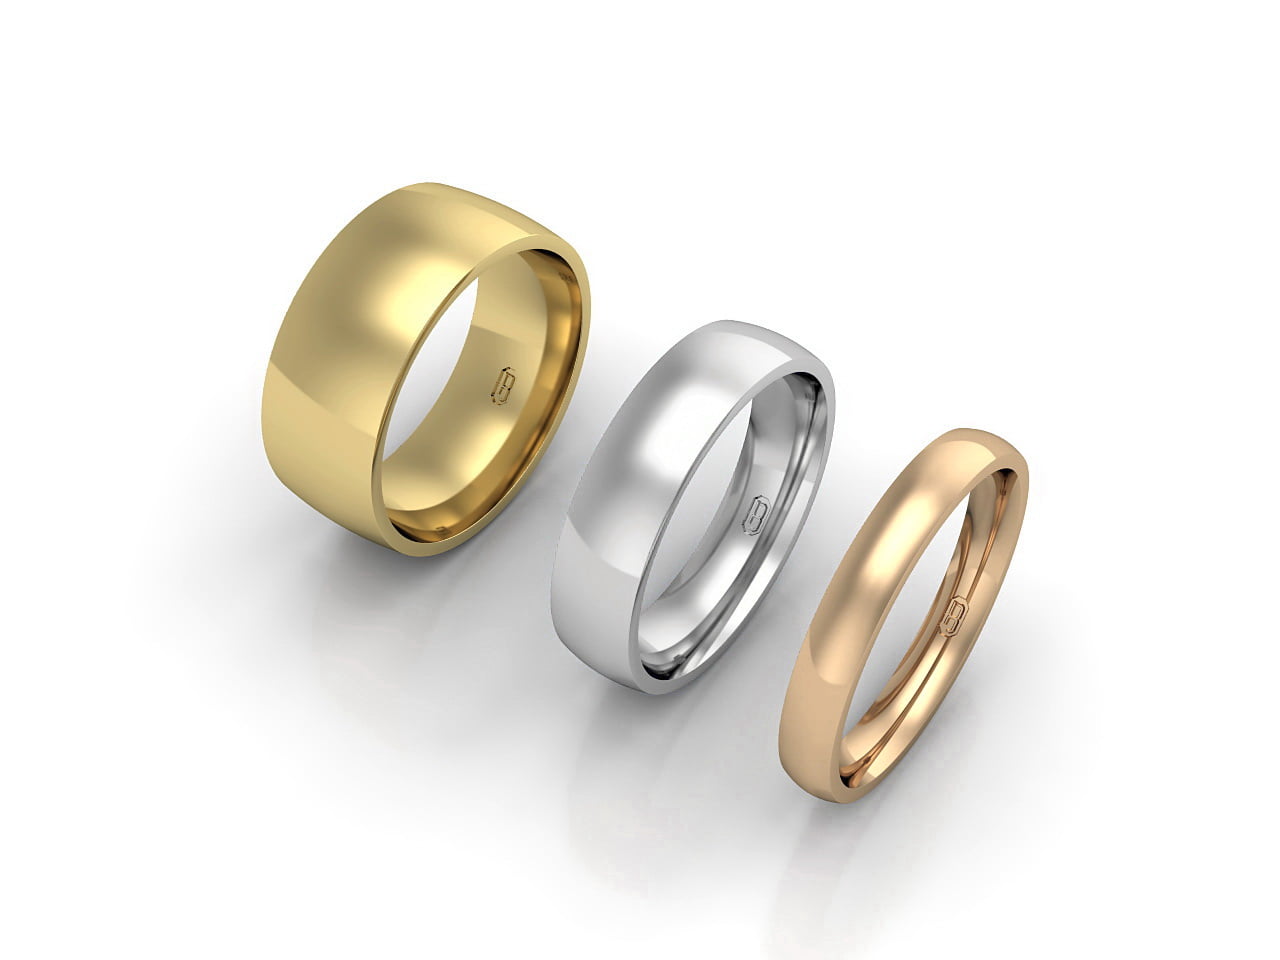 Barrel-shaped wedding ring - white, yellow, rose gold